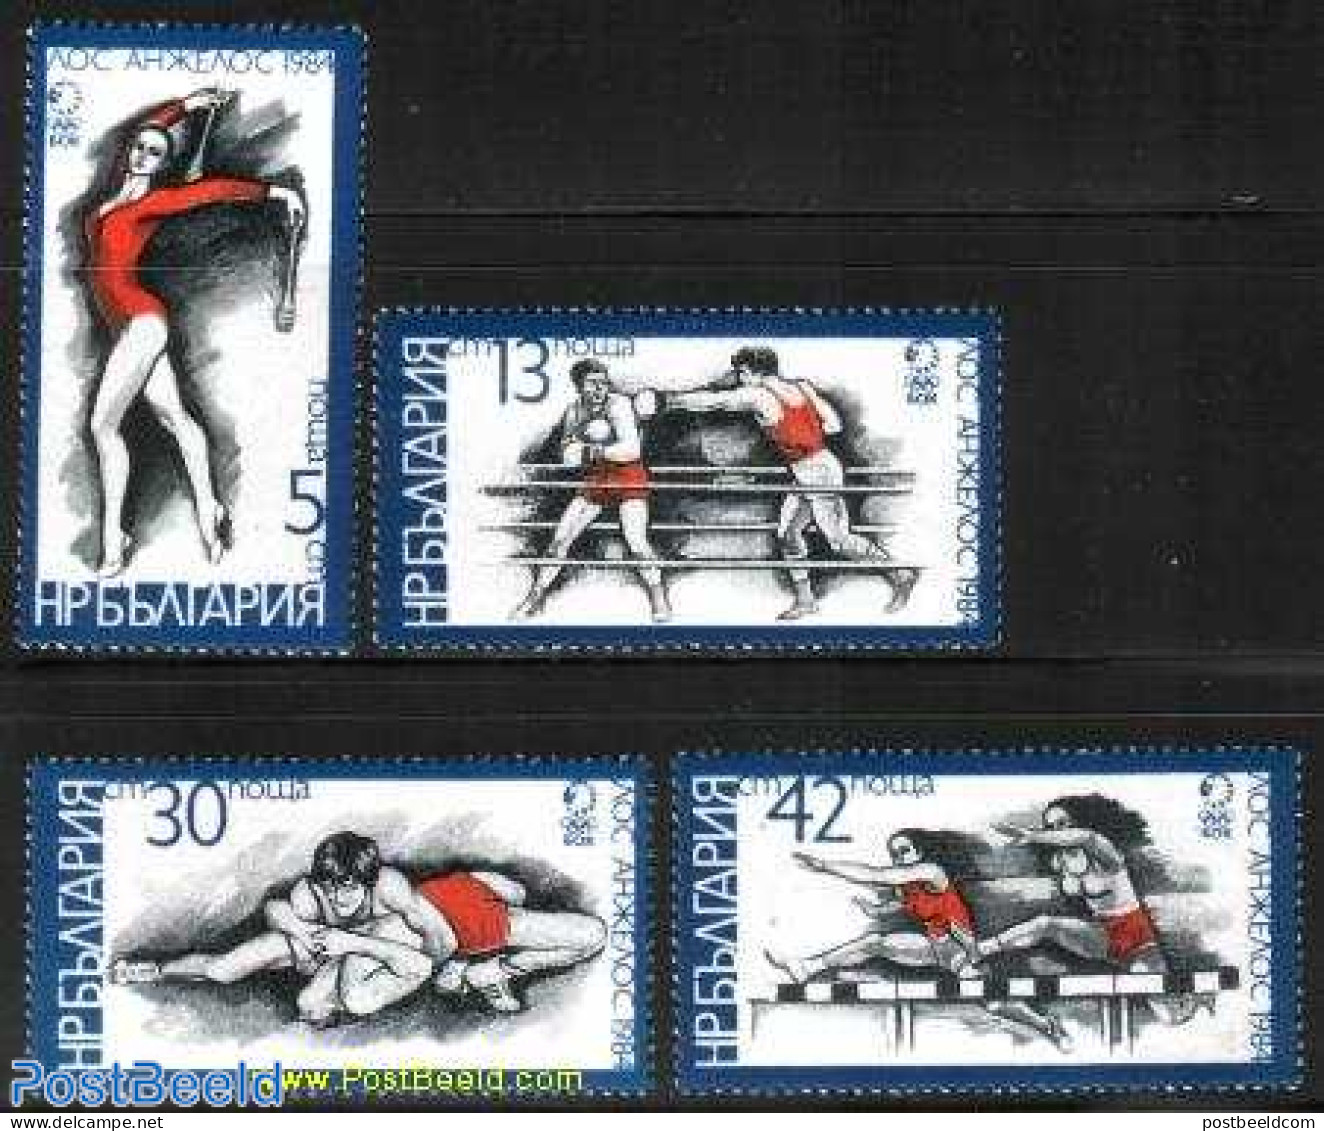 Bulgaria 1983 Olympic Games Los Angeles 4v, Mint NH, Sport - Athletics - Boxing - Gymnastics - Olympic Games - Ongebruikt